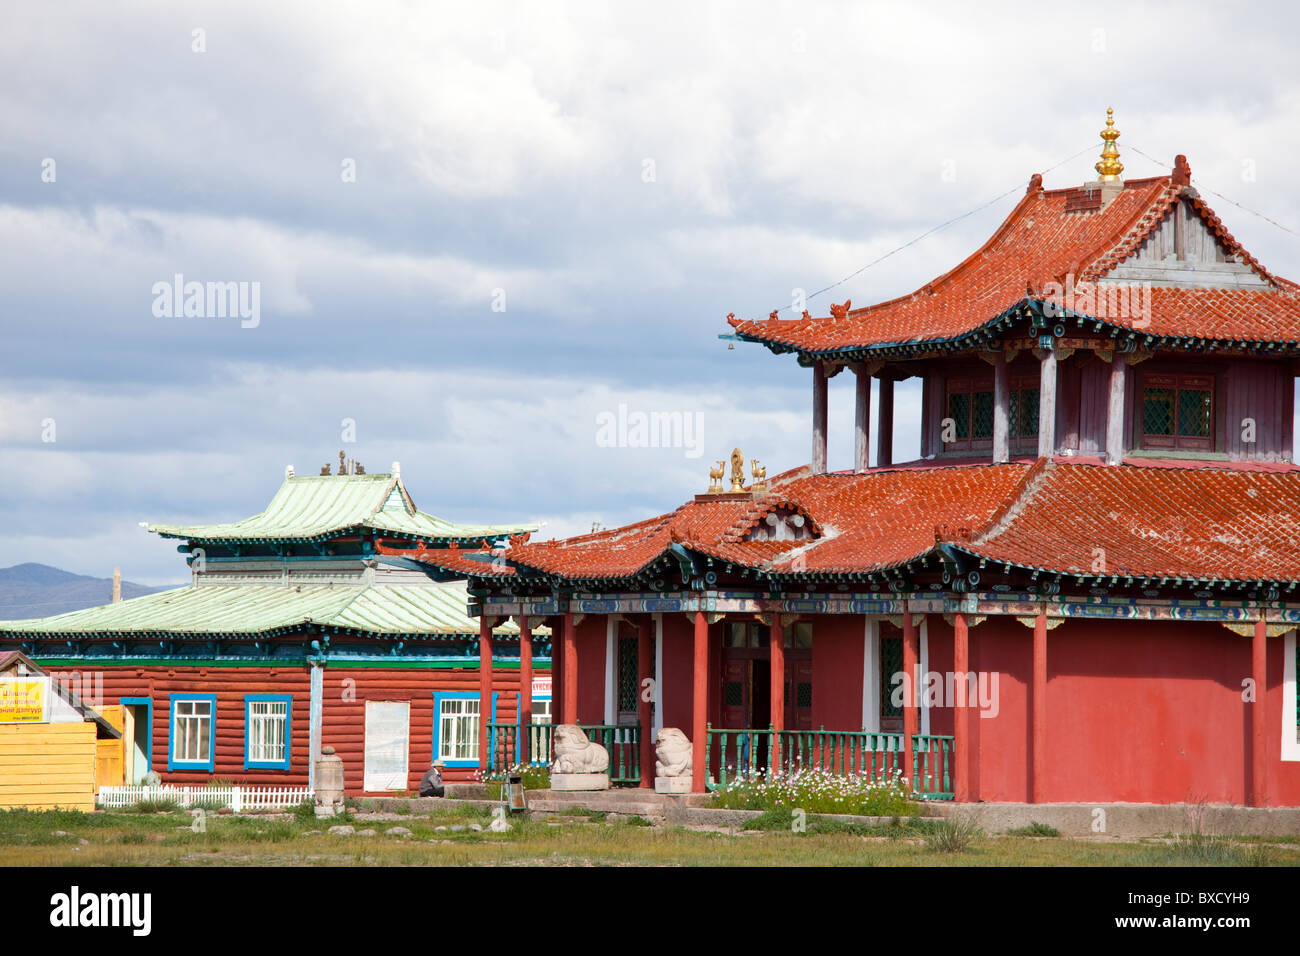 Monastero Buddista Danzandarjaa Khiid in Moron,Khovsgol provincia,Nort Mongolia Foto Stock